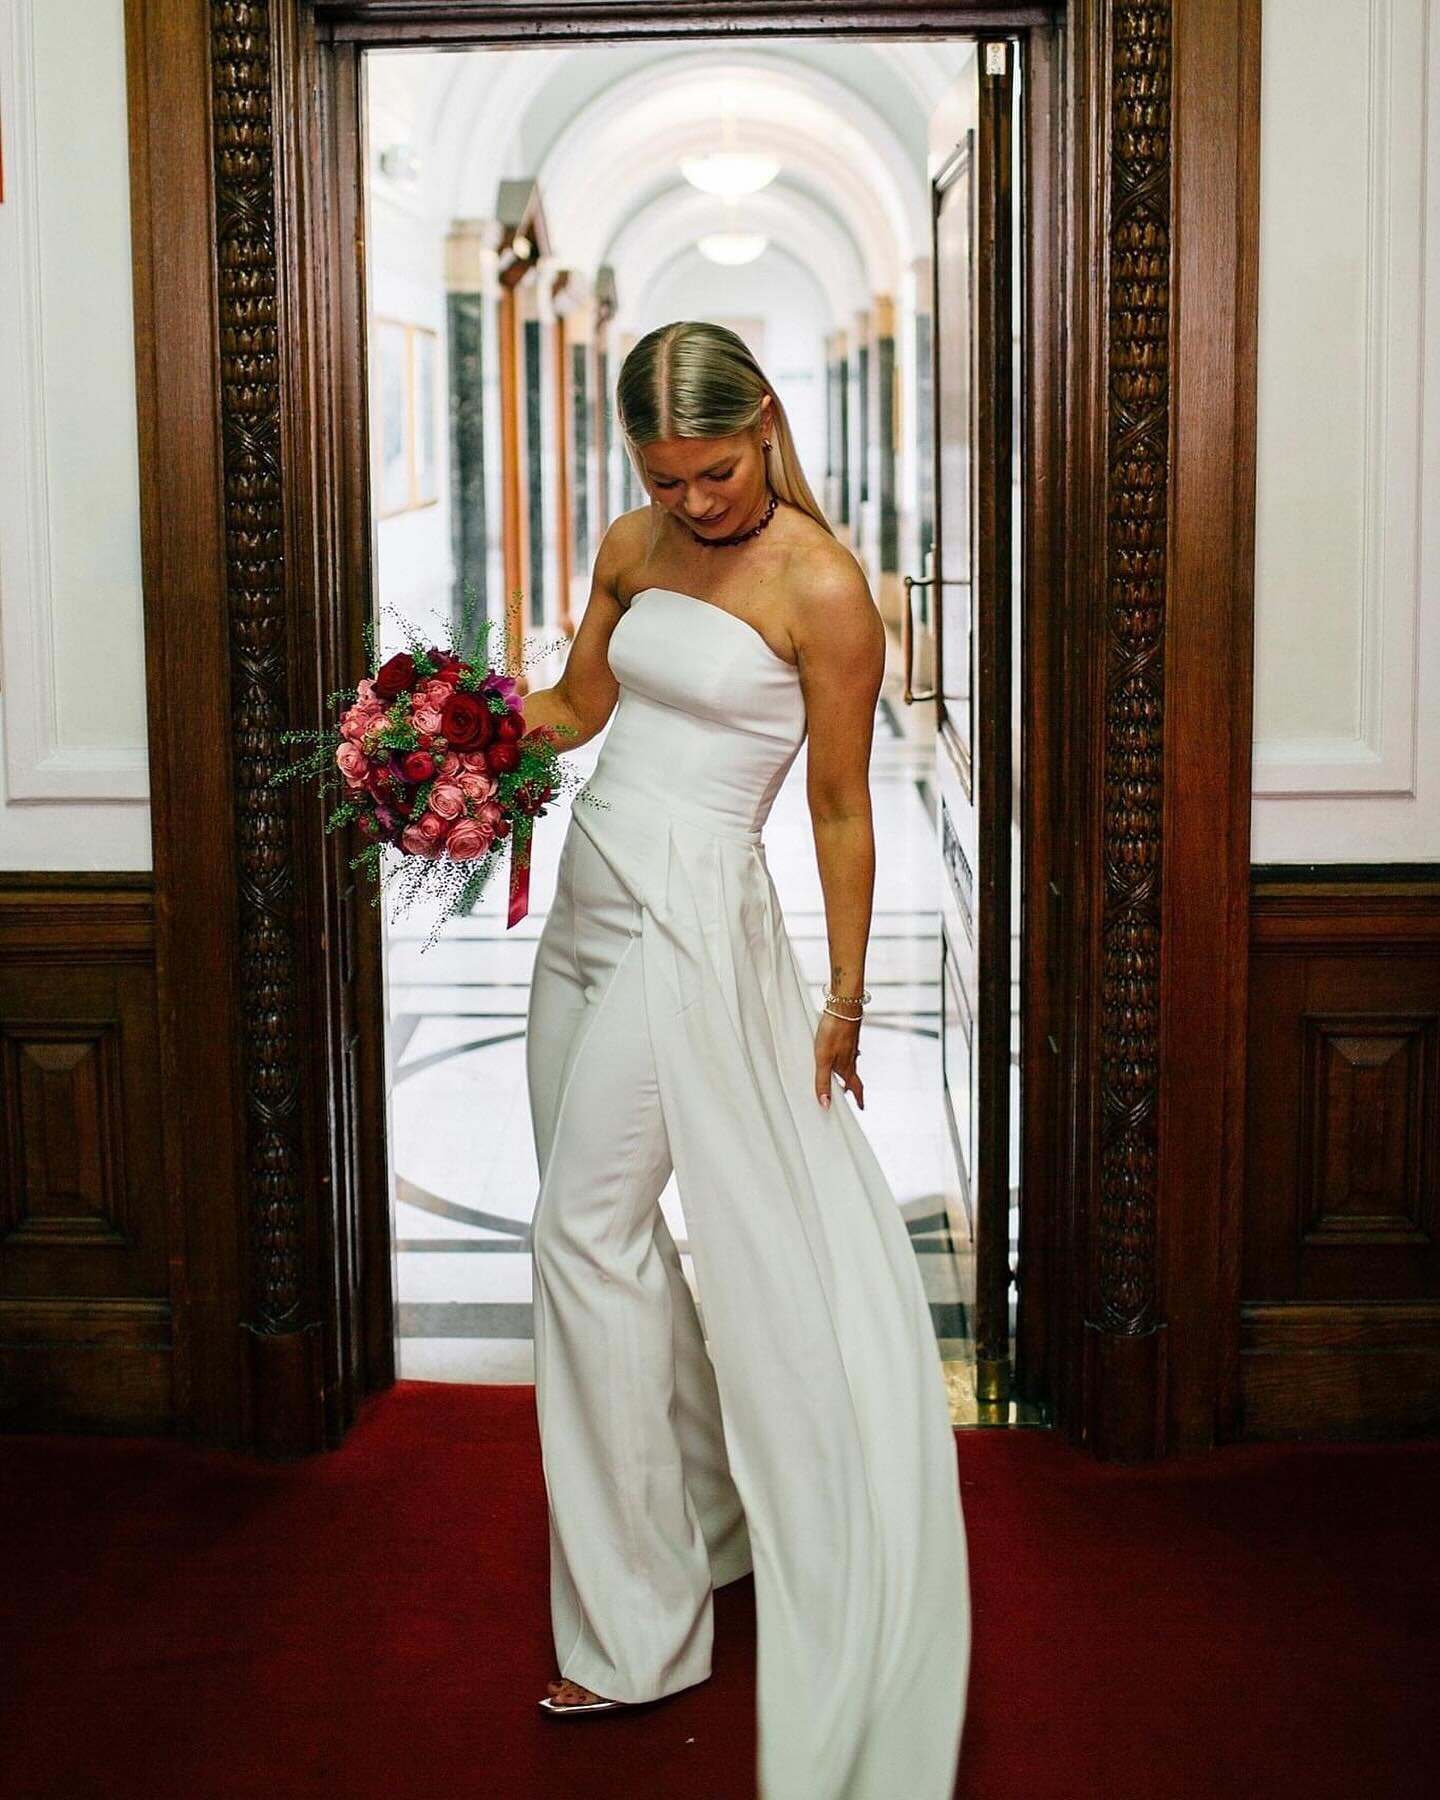 Zoe stylish bridal wear by @nadinemerabi  Absolutely gorgeous. 

venue @sayidoislington 

#weddingdress #wedding #weddingday #islingtonweddingphotographer #londonweddingphotographer #bridestyle #weddingjumpsuit